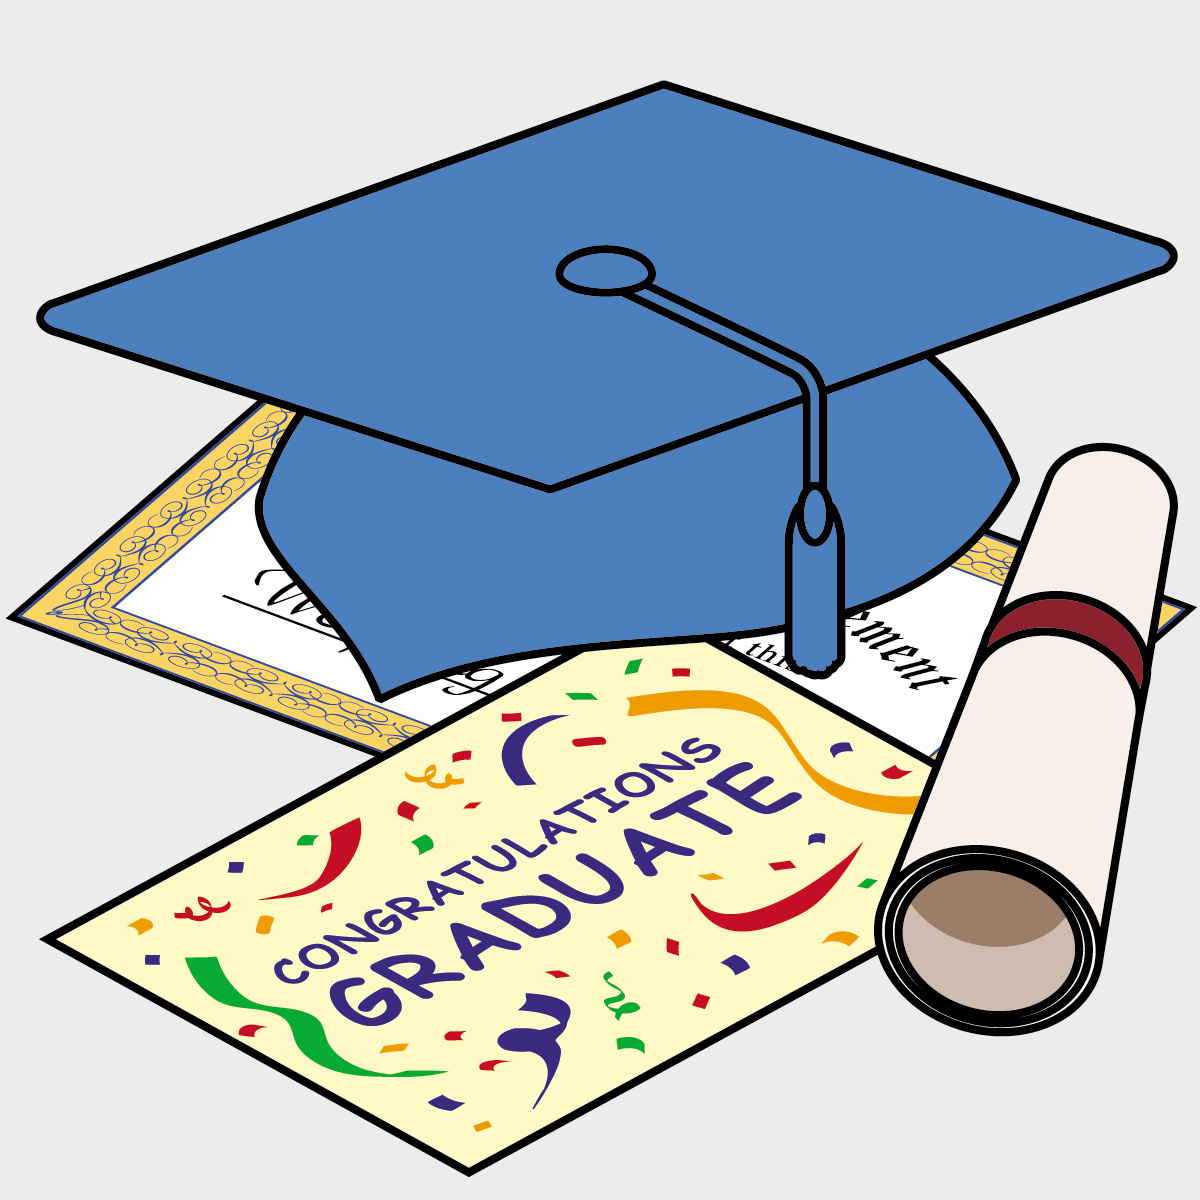 Graduation animated clip art - ClipartFox